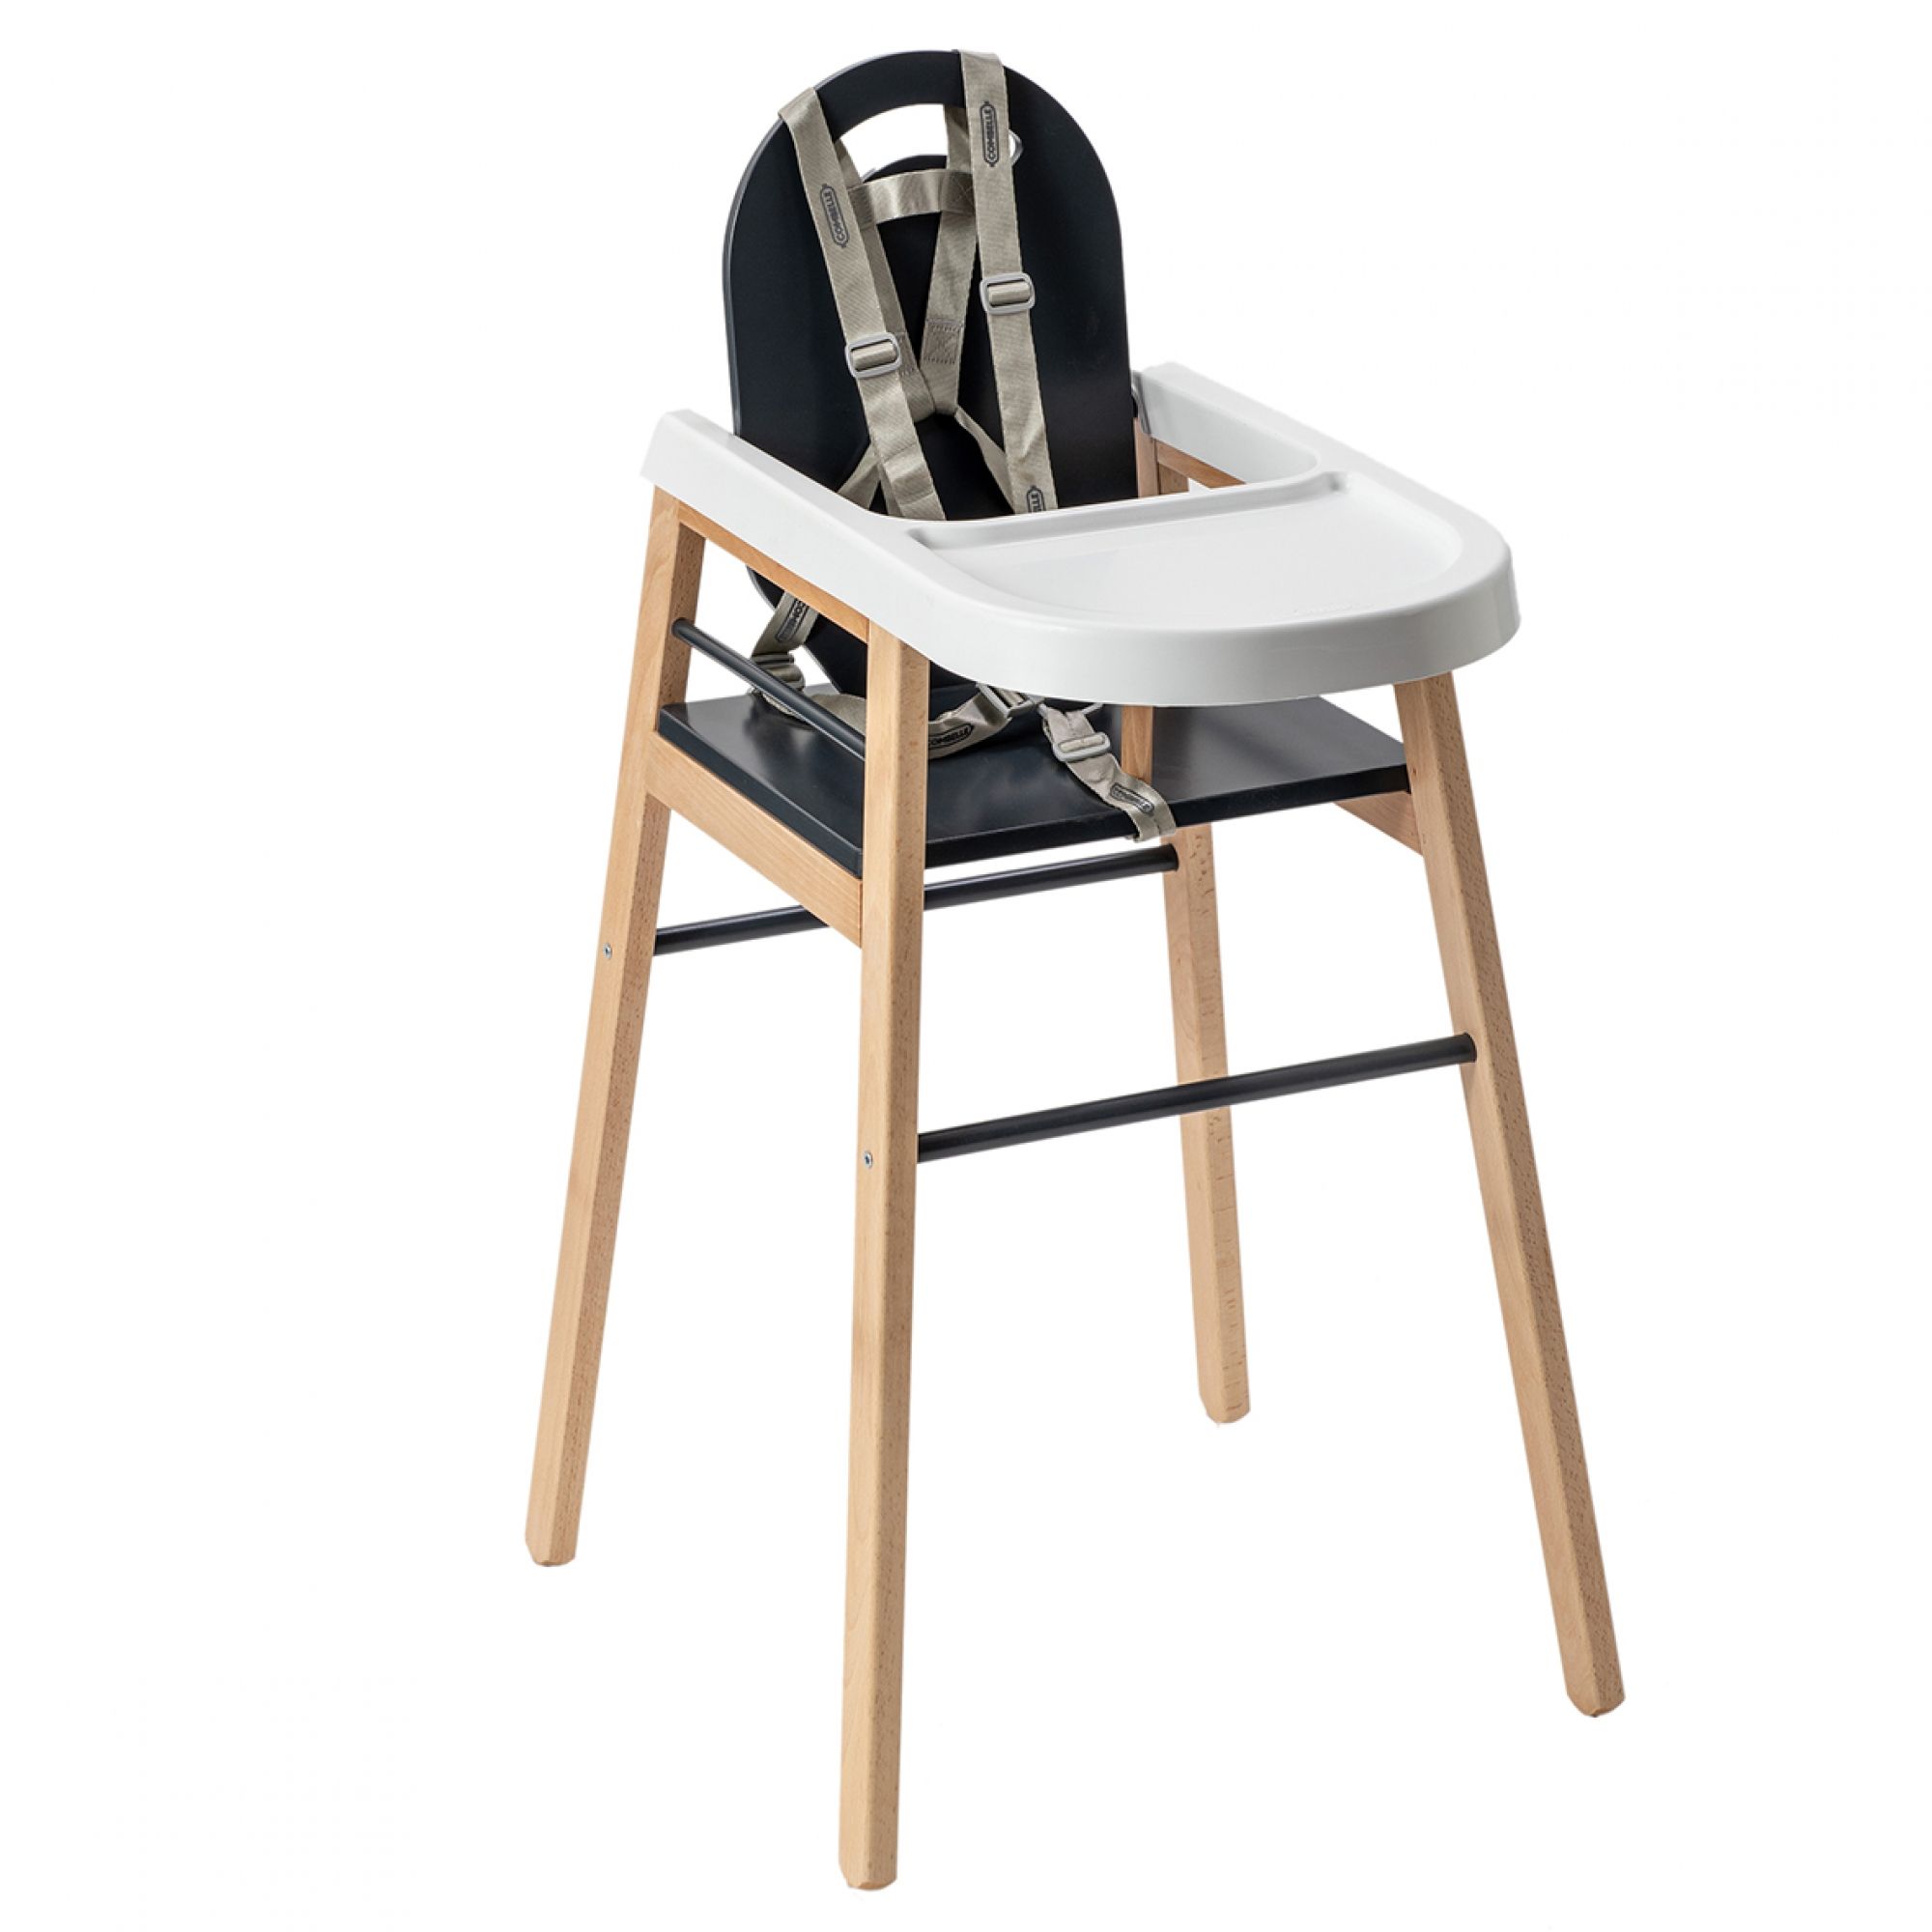 Harnais chaise haute Gris - Made in Bébé